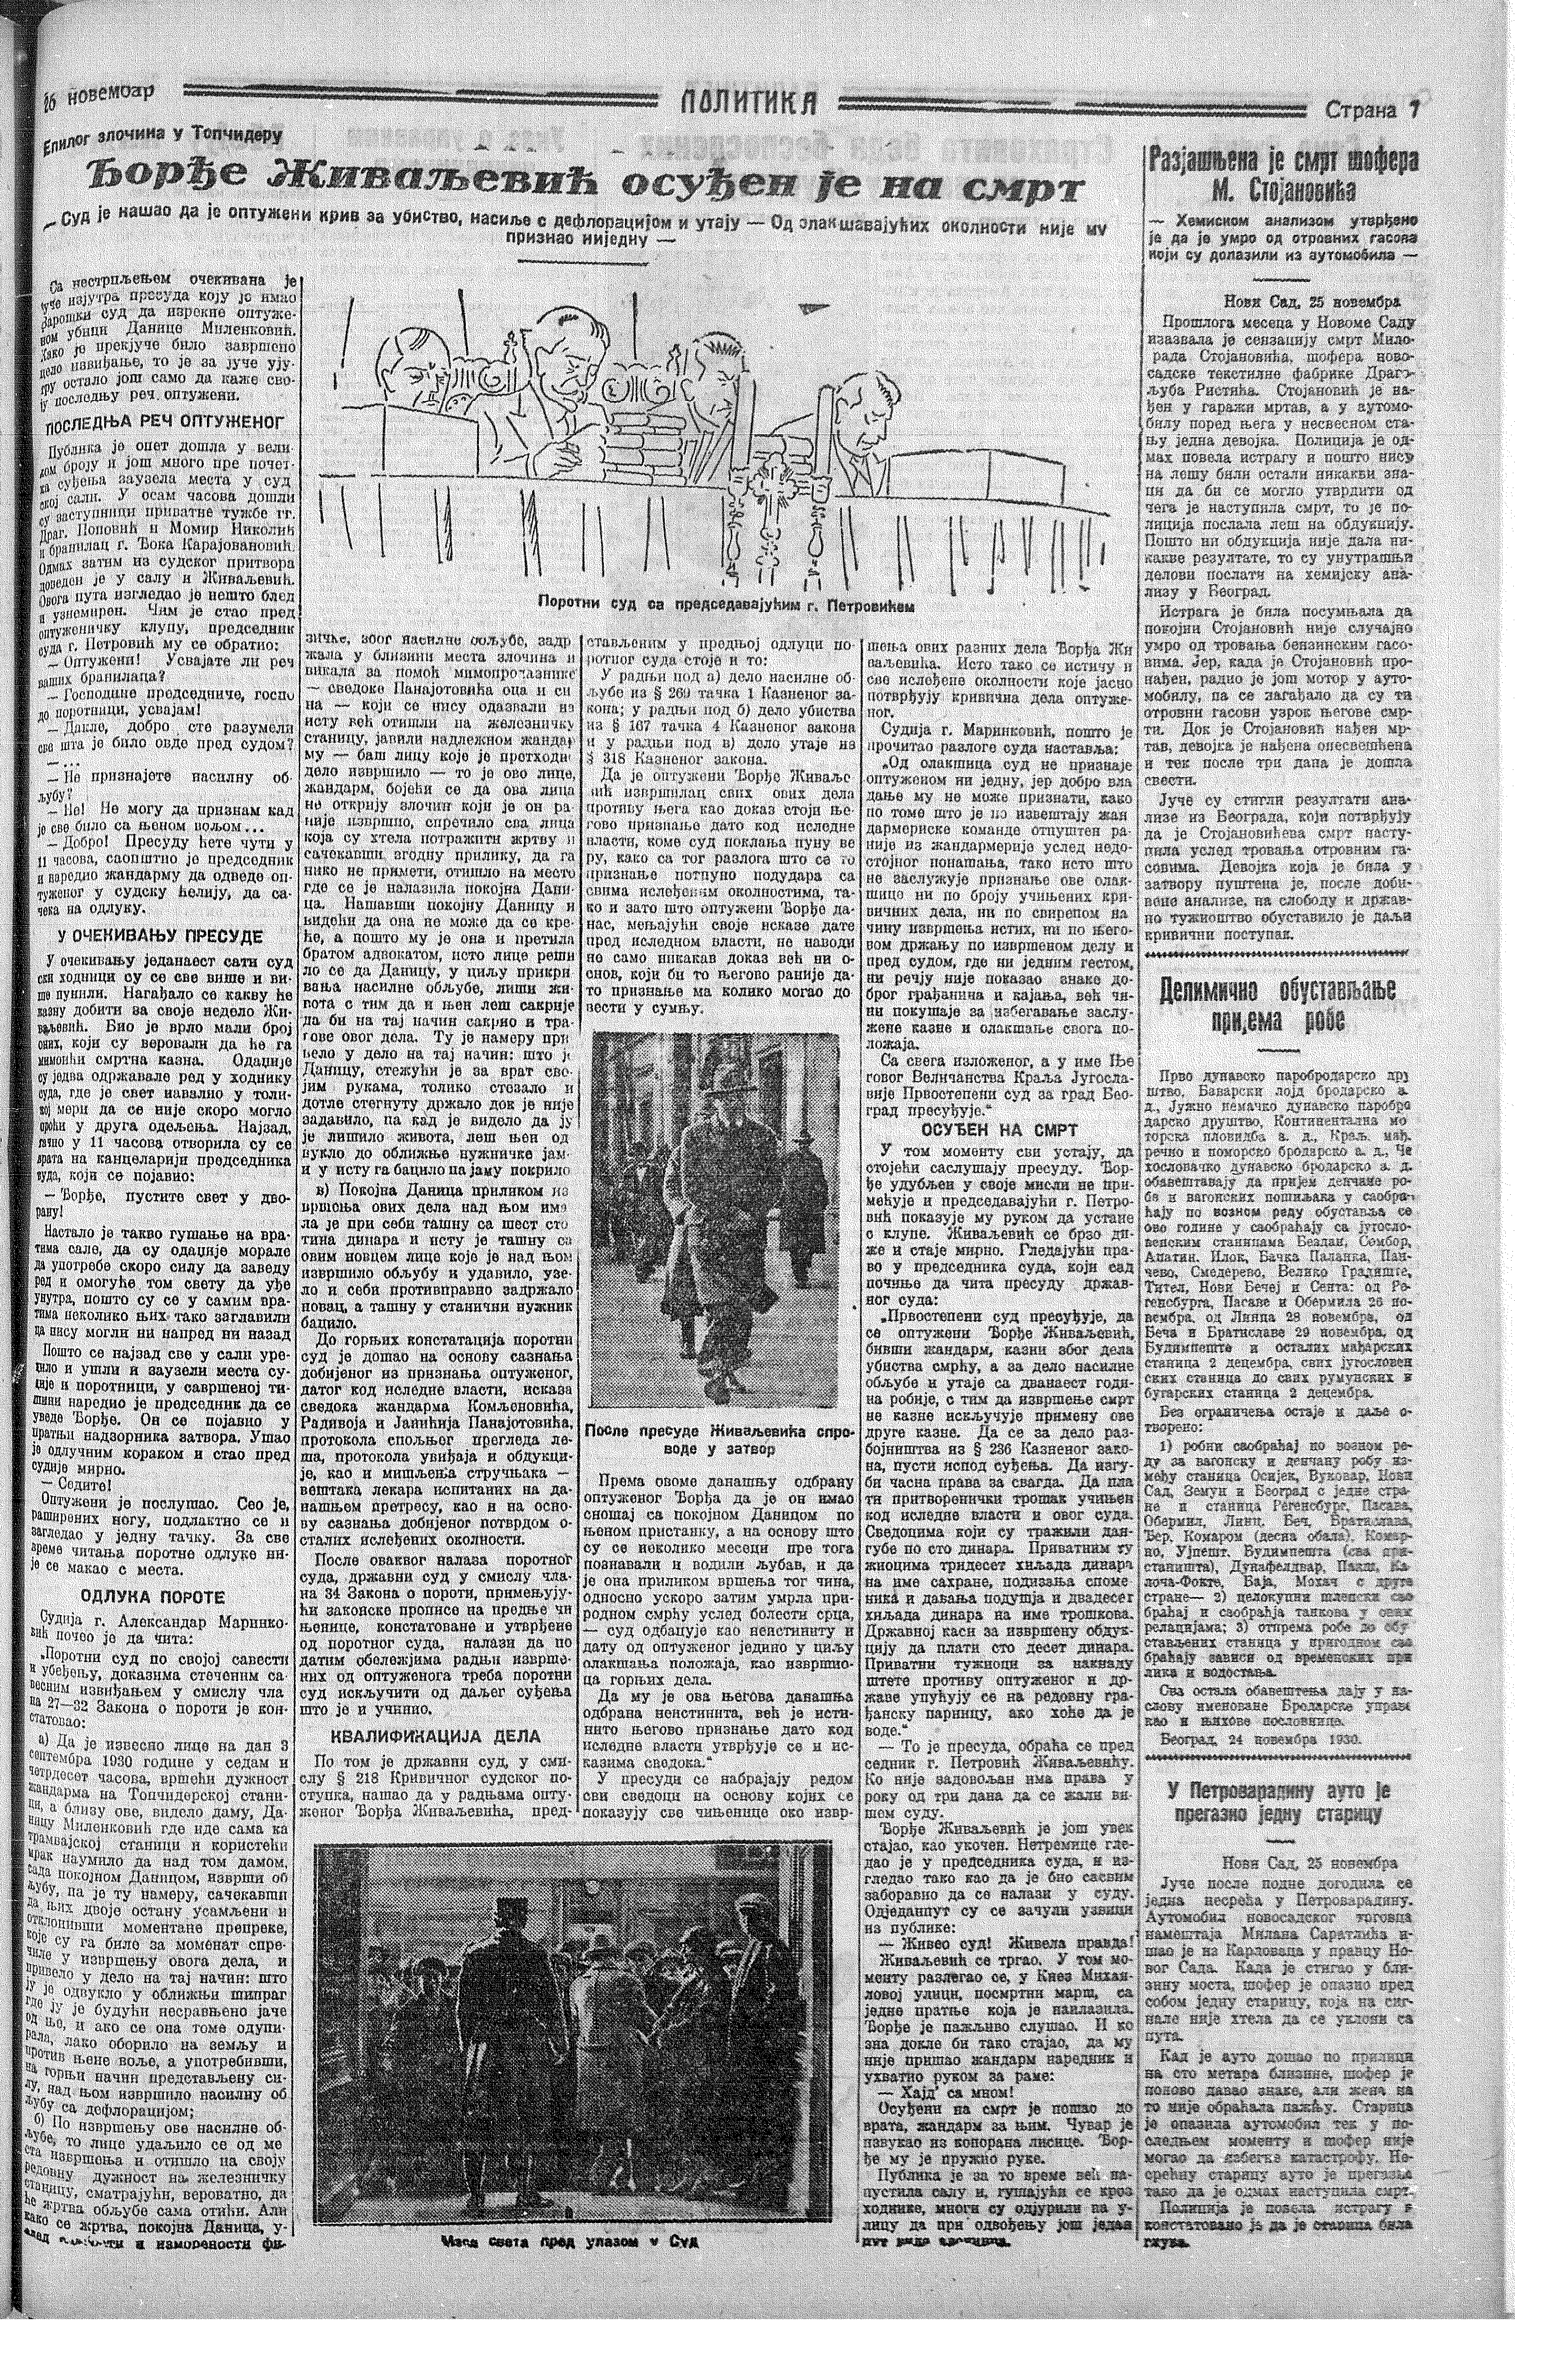 Živaljević osuđen na smrt, Politika, 26.11.1931.